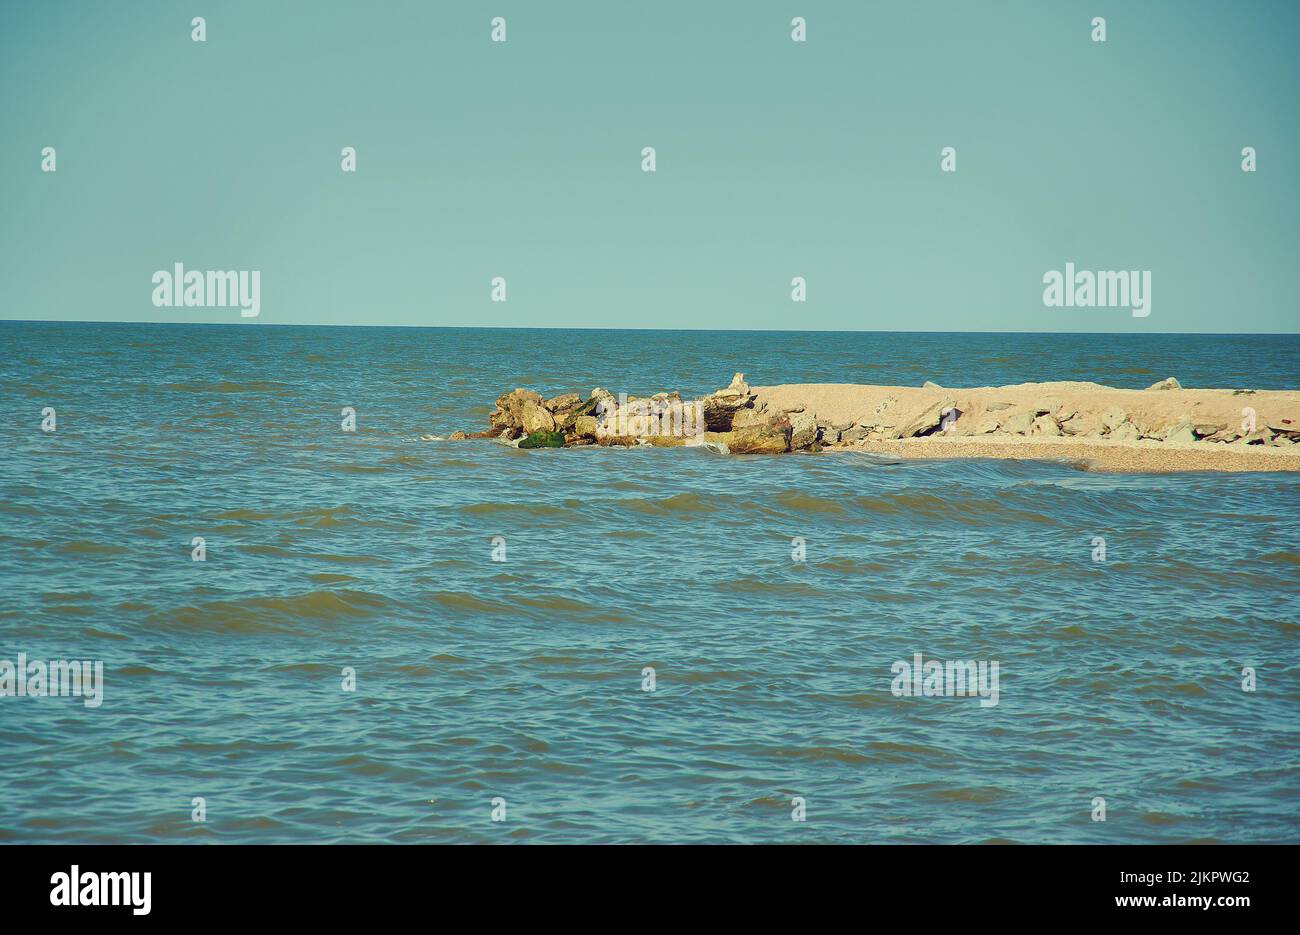 Dolzhanskaya spit,  located on the coast of the Azov Sea, at the base of Dolgaya Spit. Stock Photo